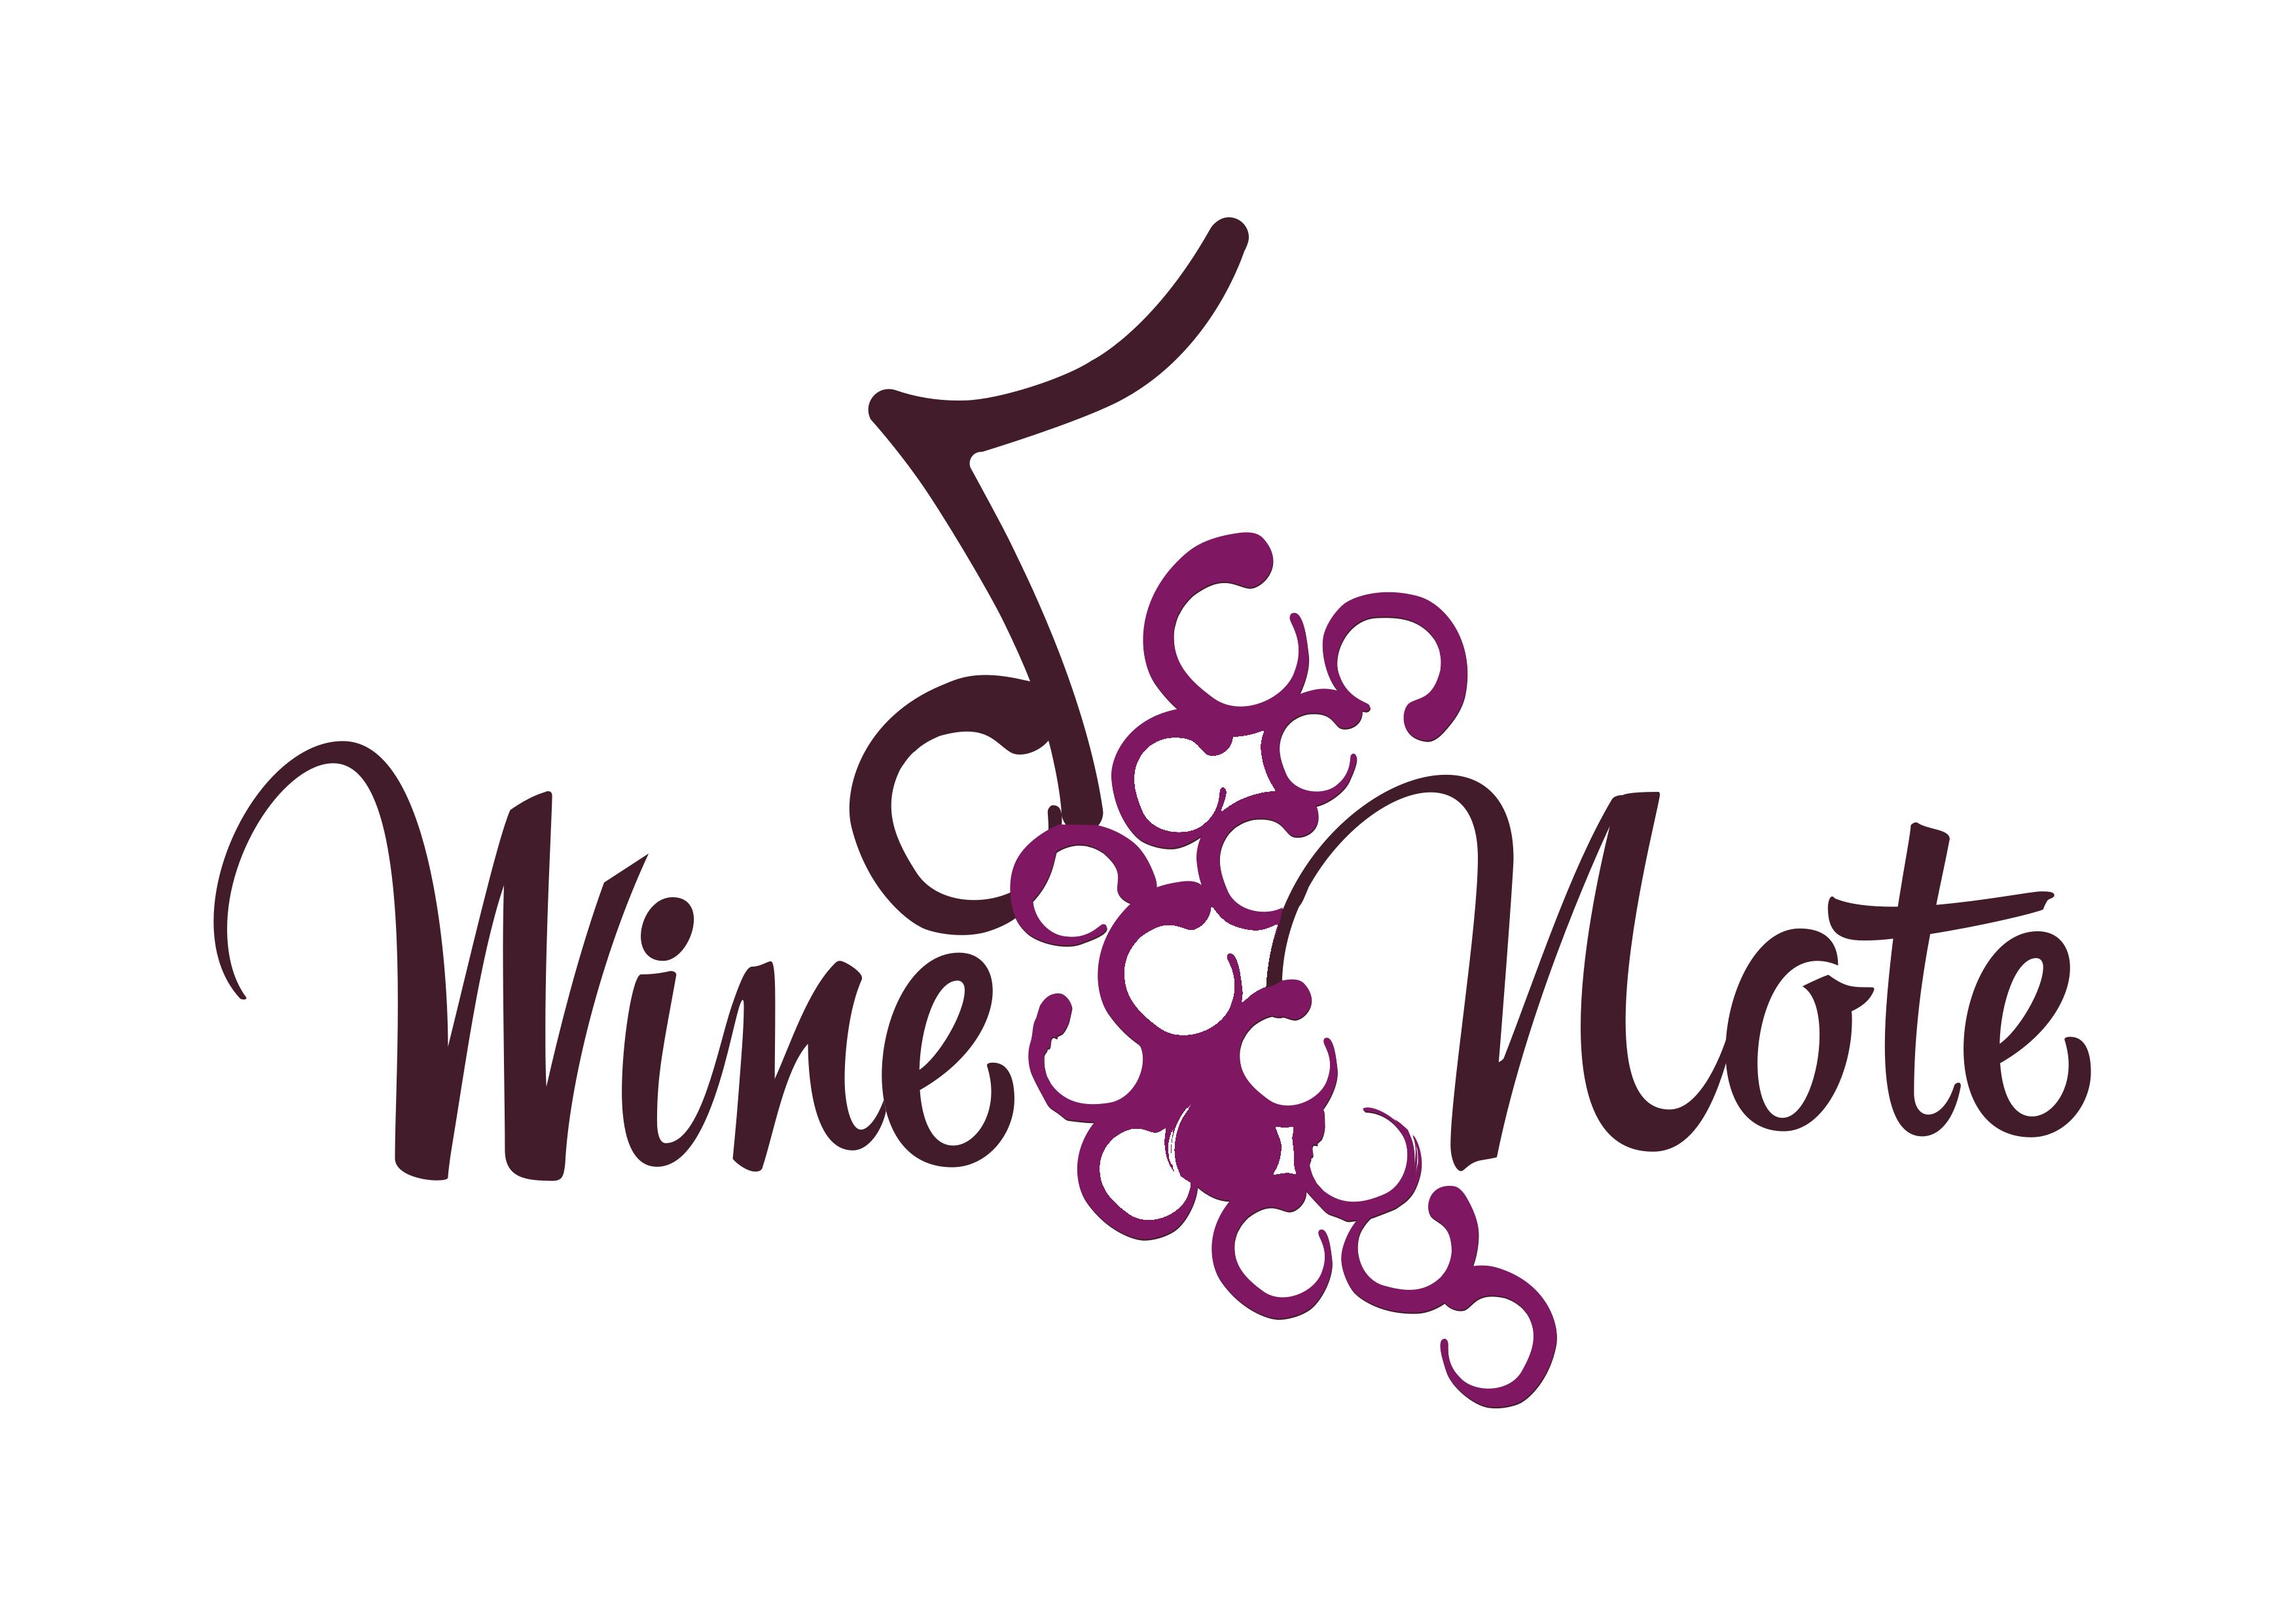 Vineria Wine Note